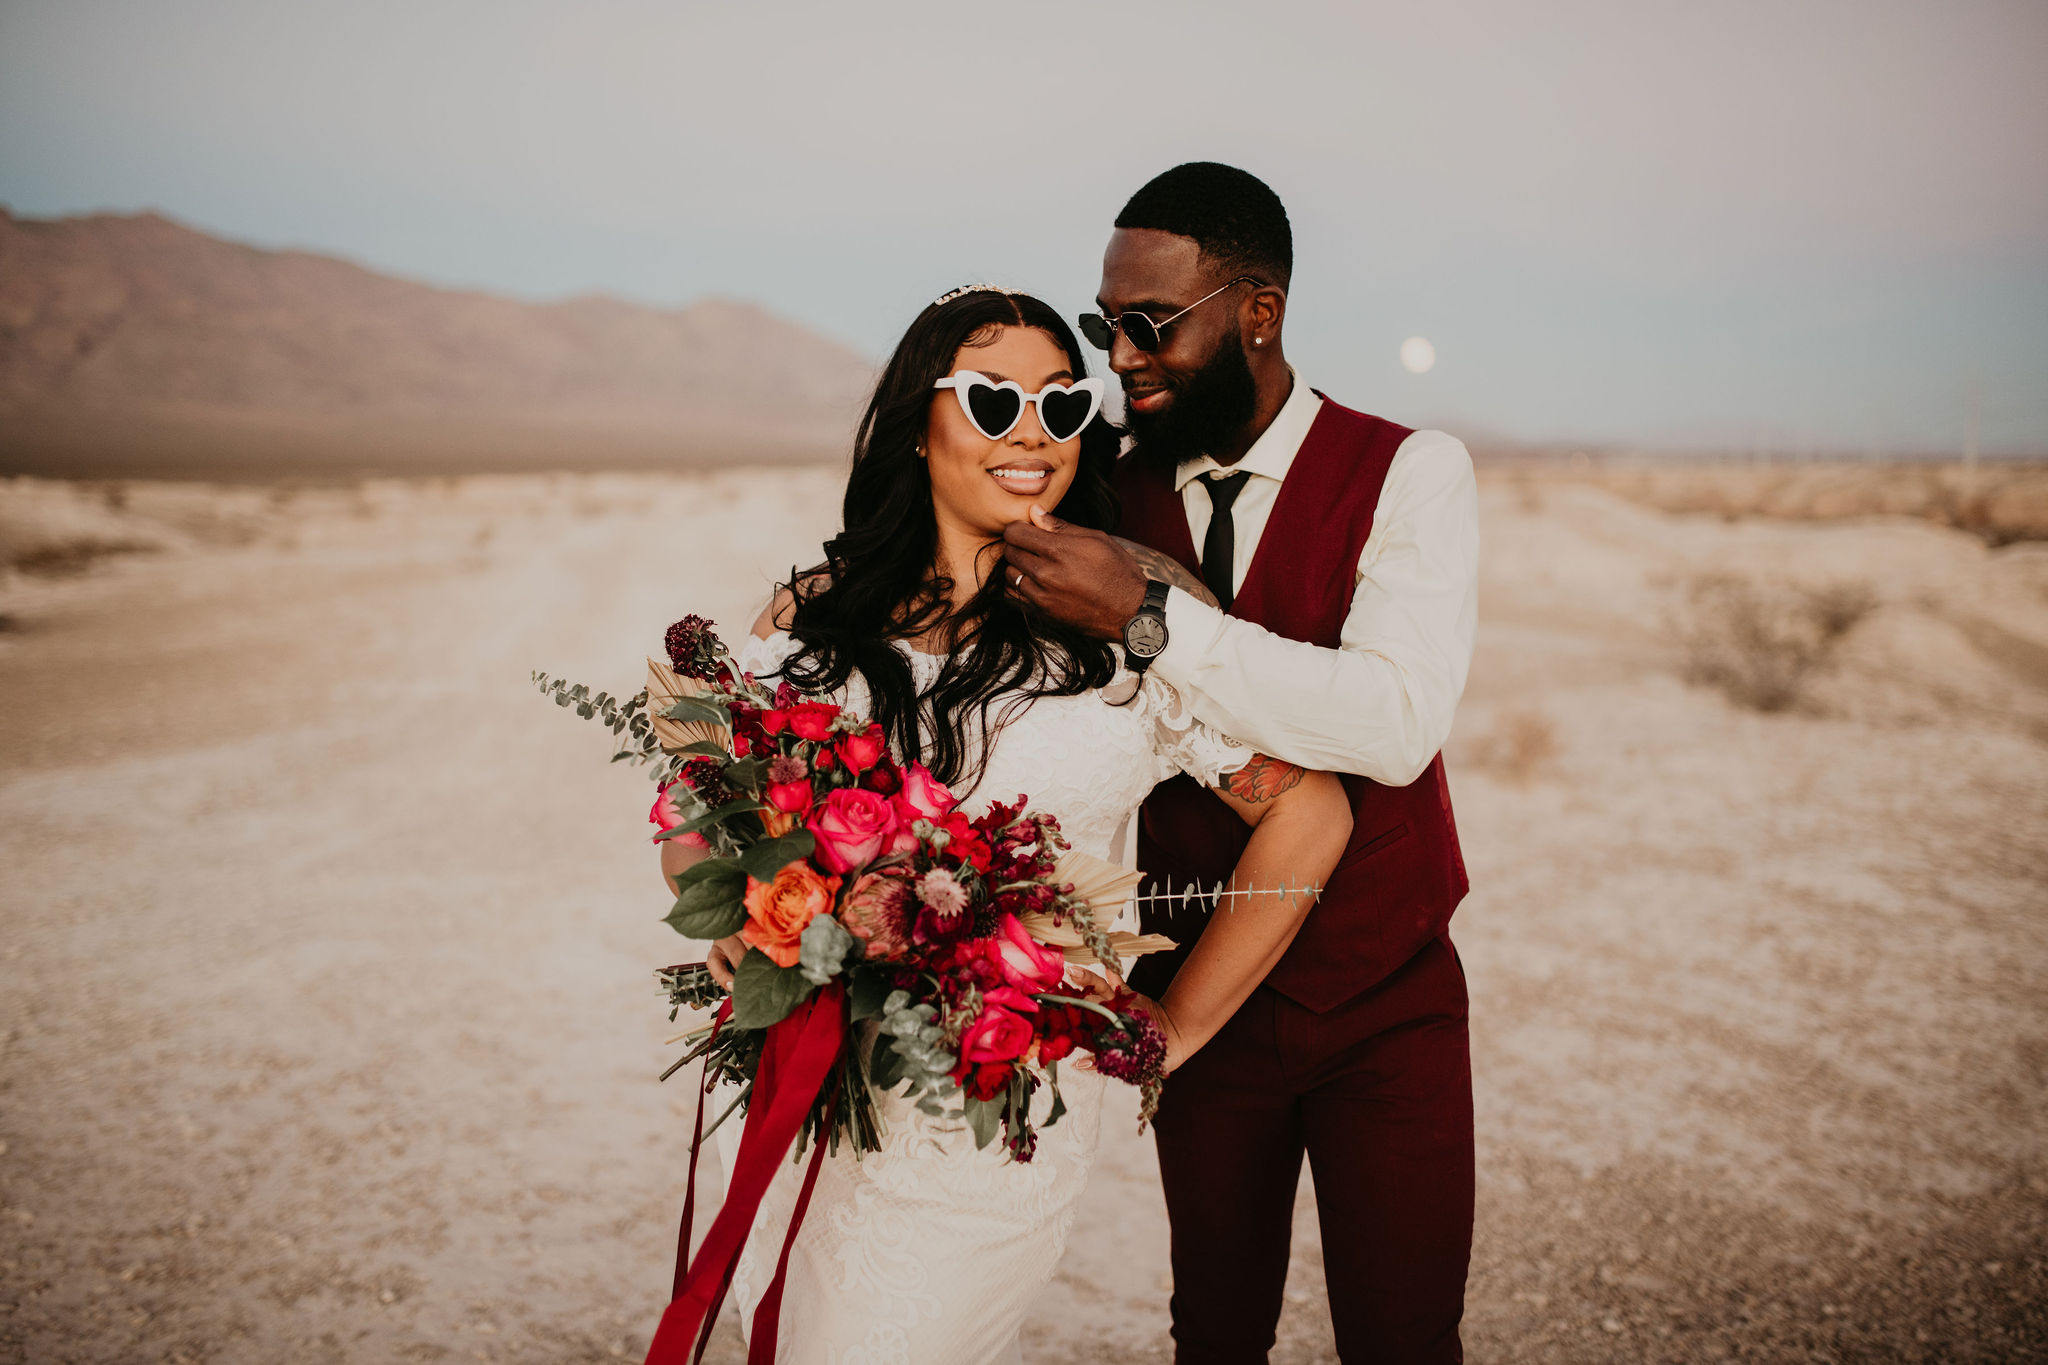 Bride and Groom in Sunglasses in desert 